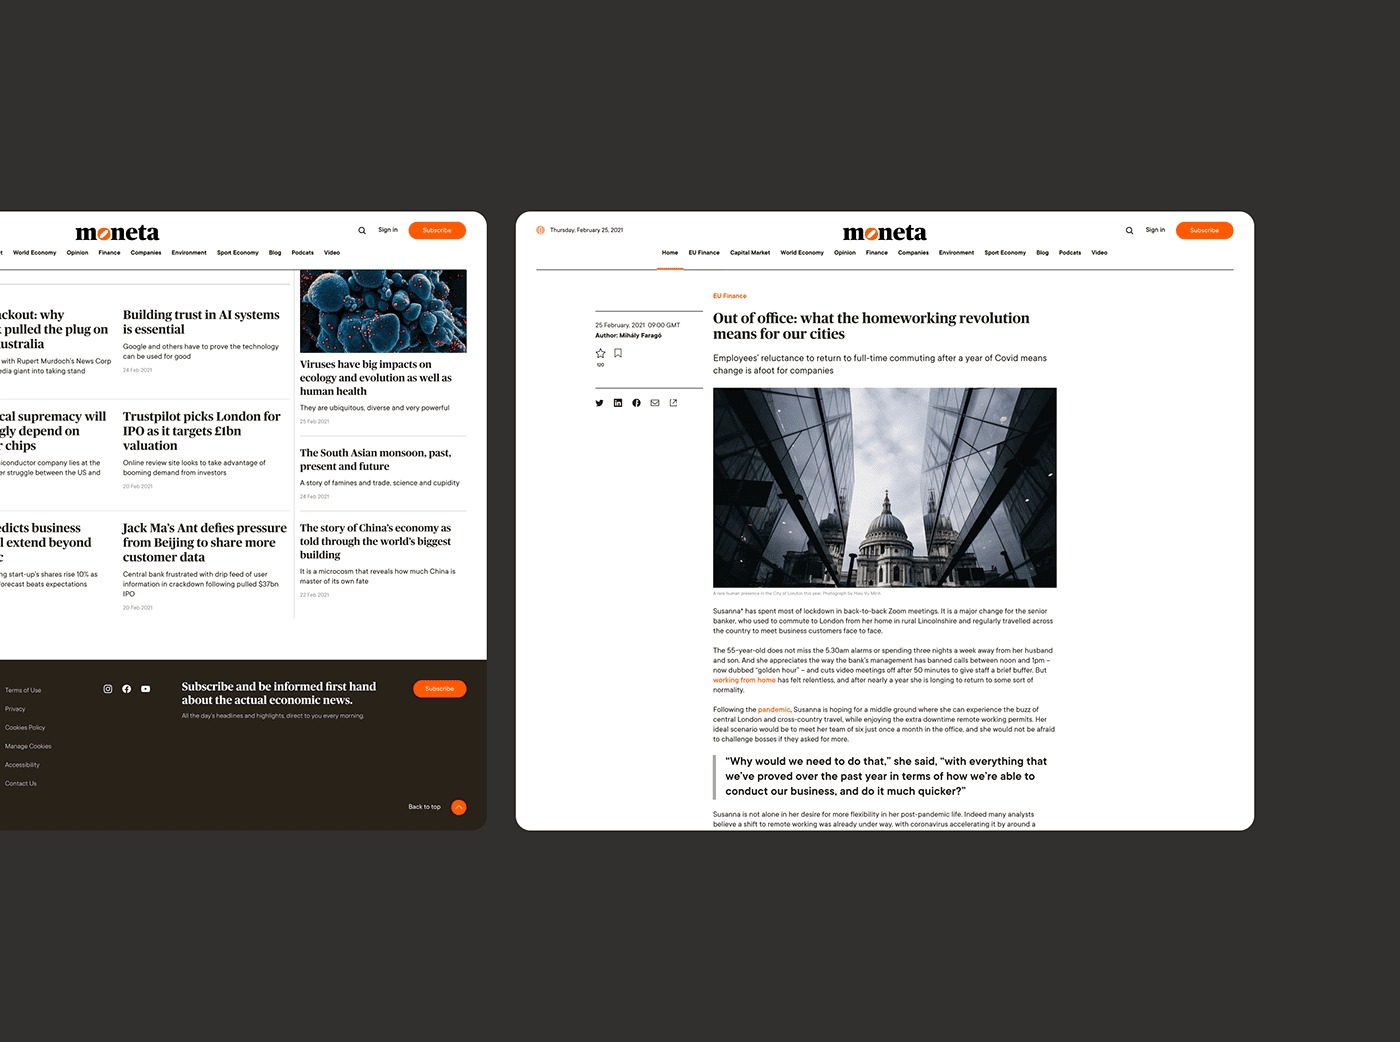 Moneta金融新闻网页设计作品，创意国外新闻品牌网页设计。